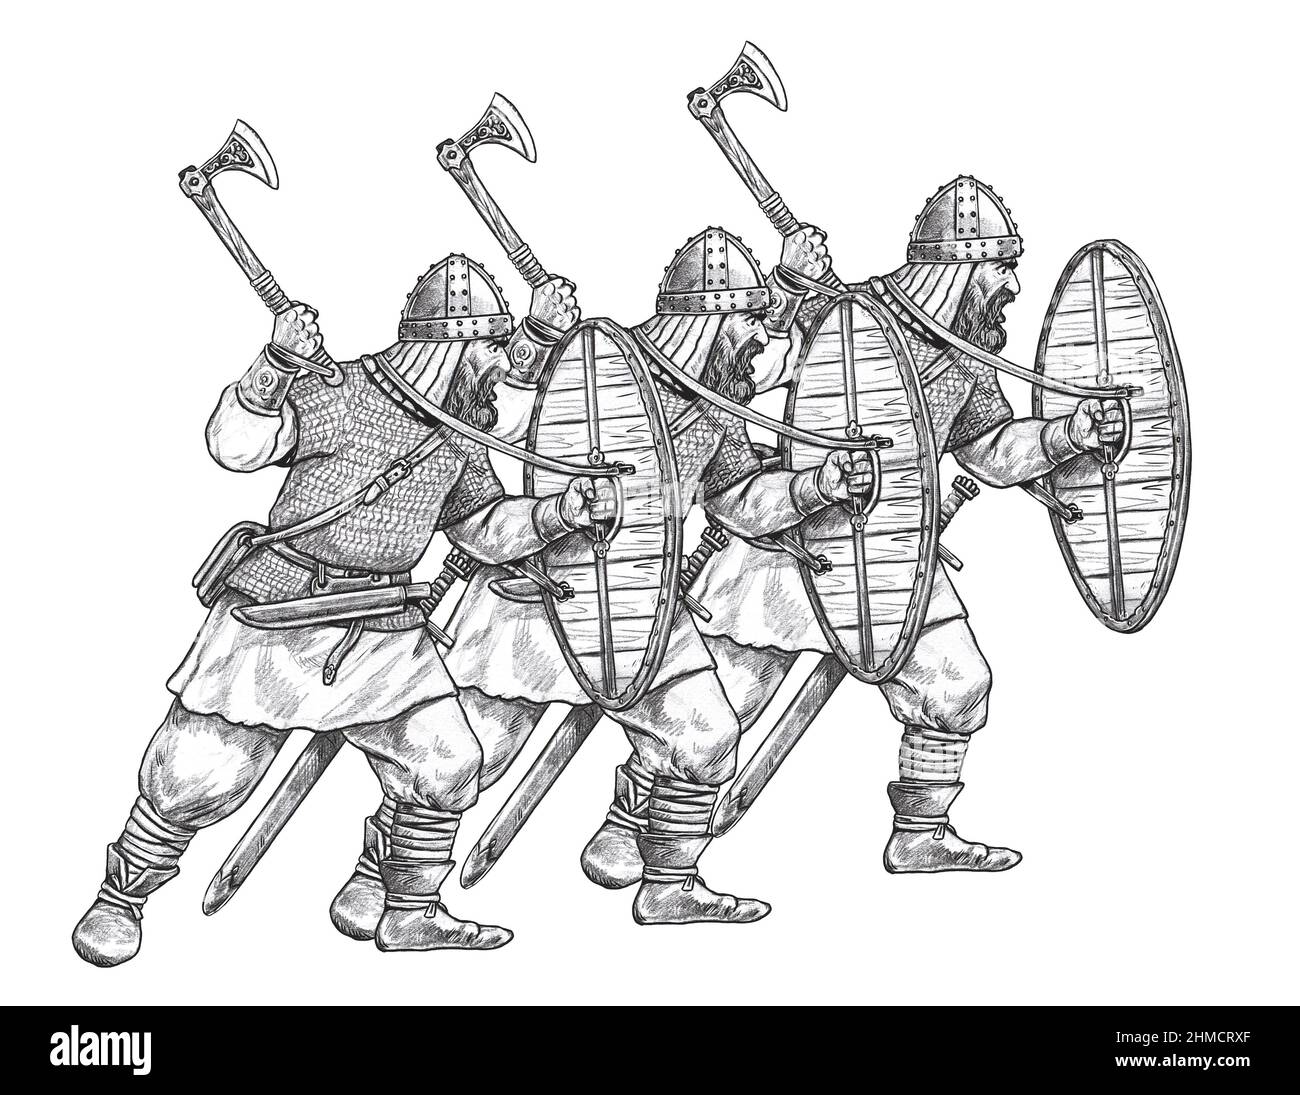 Vikings attack. Norman warrior in battle. Medieval knight illustration. Stock Photo